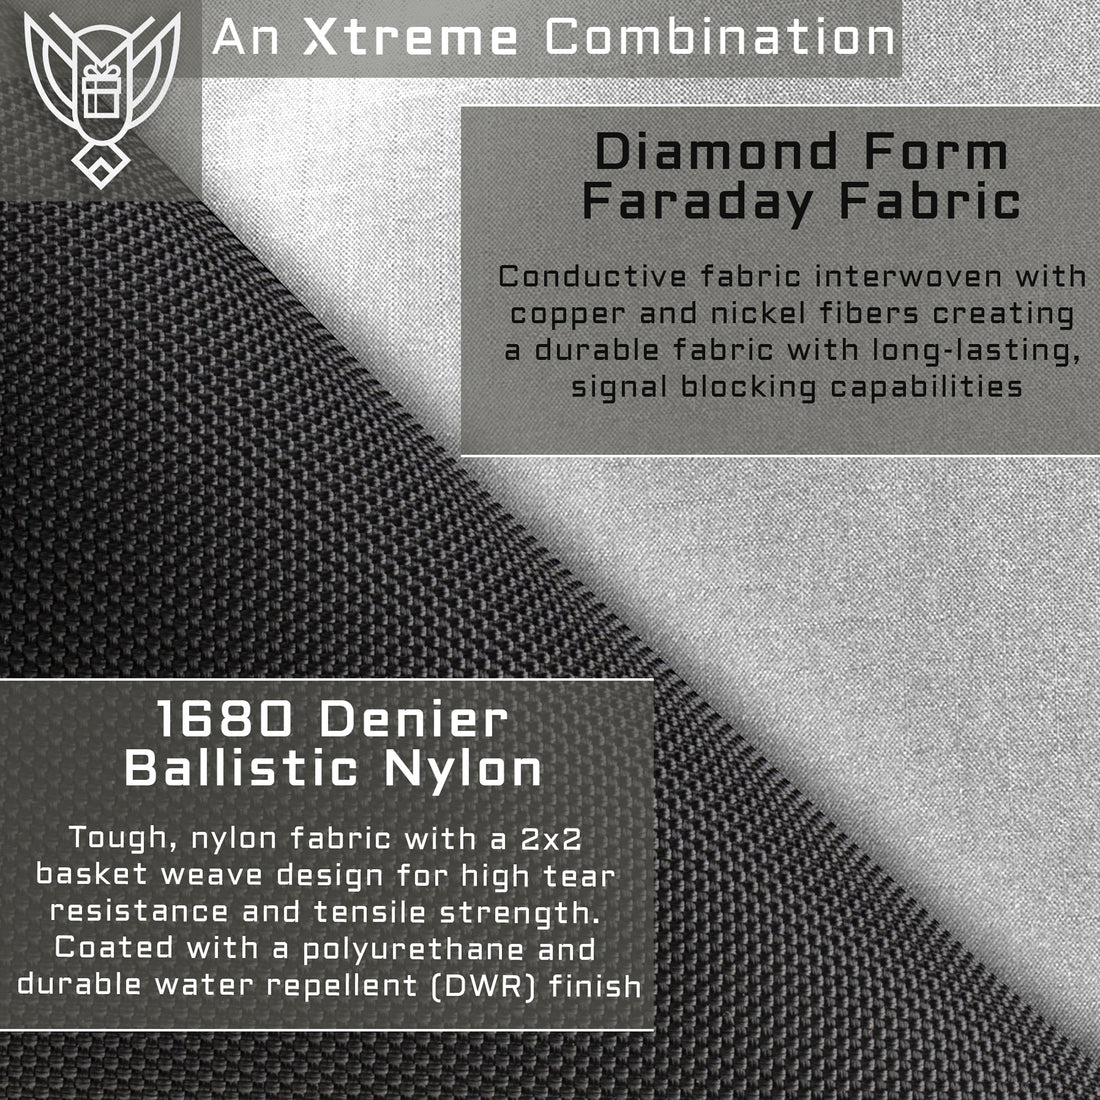 Diamond Form Faraday Fabric – xtremesightline